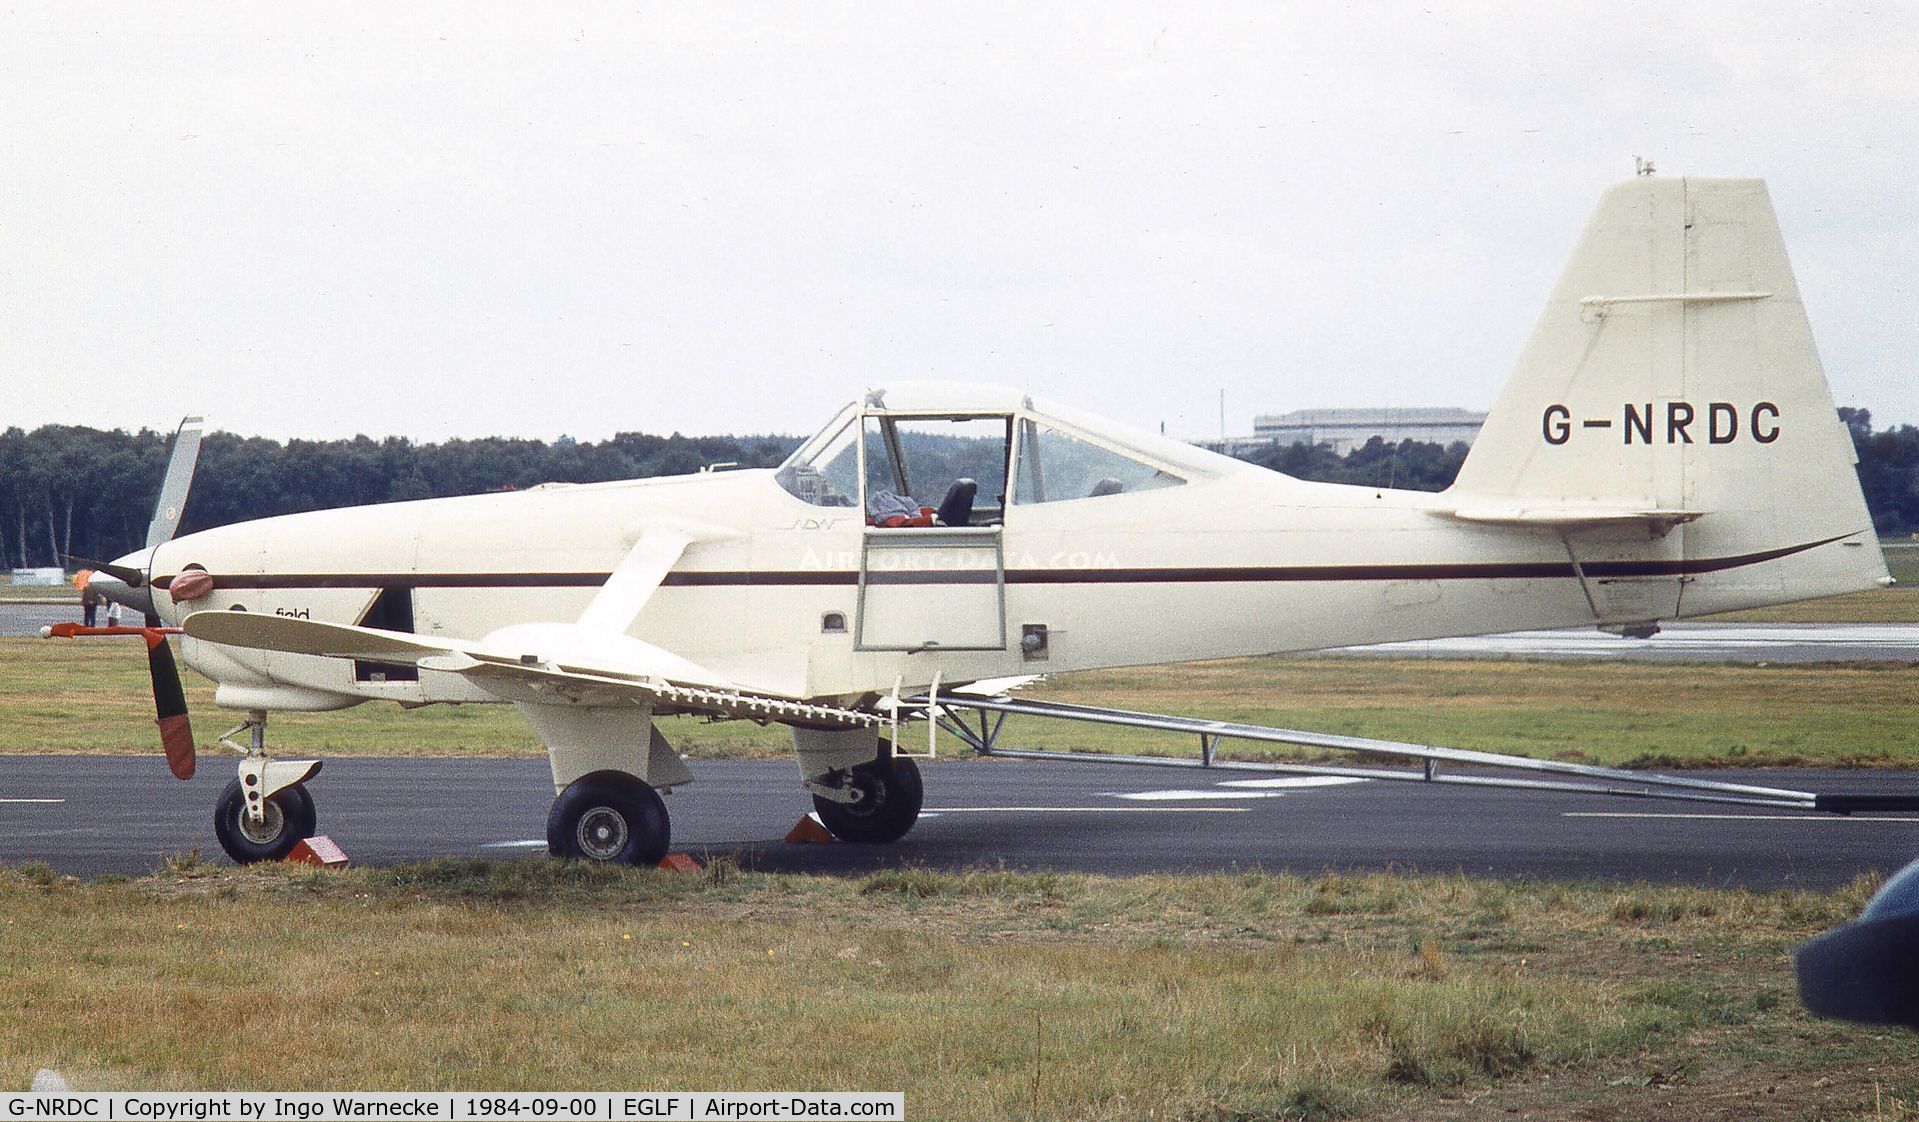 G-NRDC, 1981 NDN NDN-6 Fieldmaster C/N 004, NDN Aircraft NDN-6 Fieldmaster at Farnborough International 1984